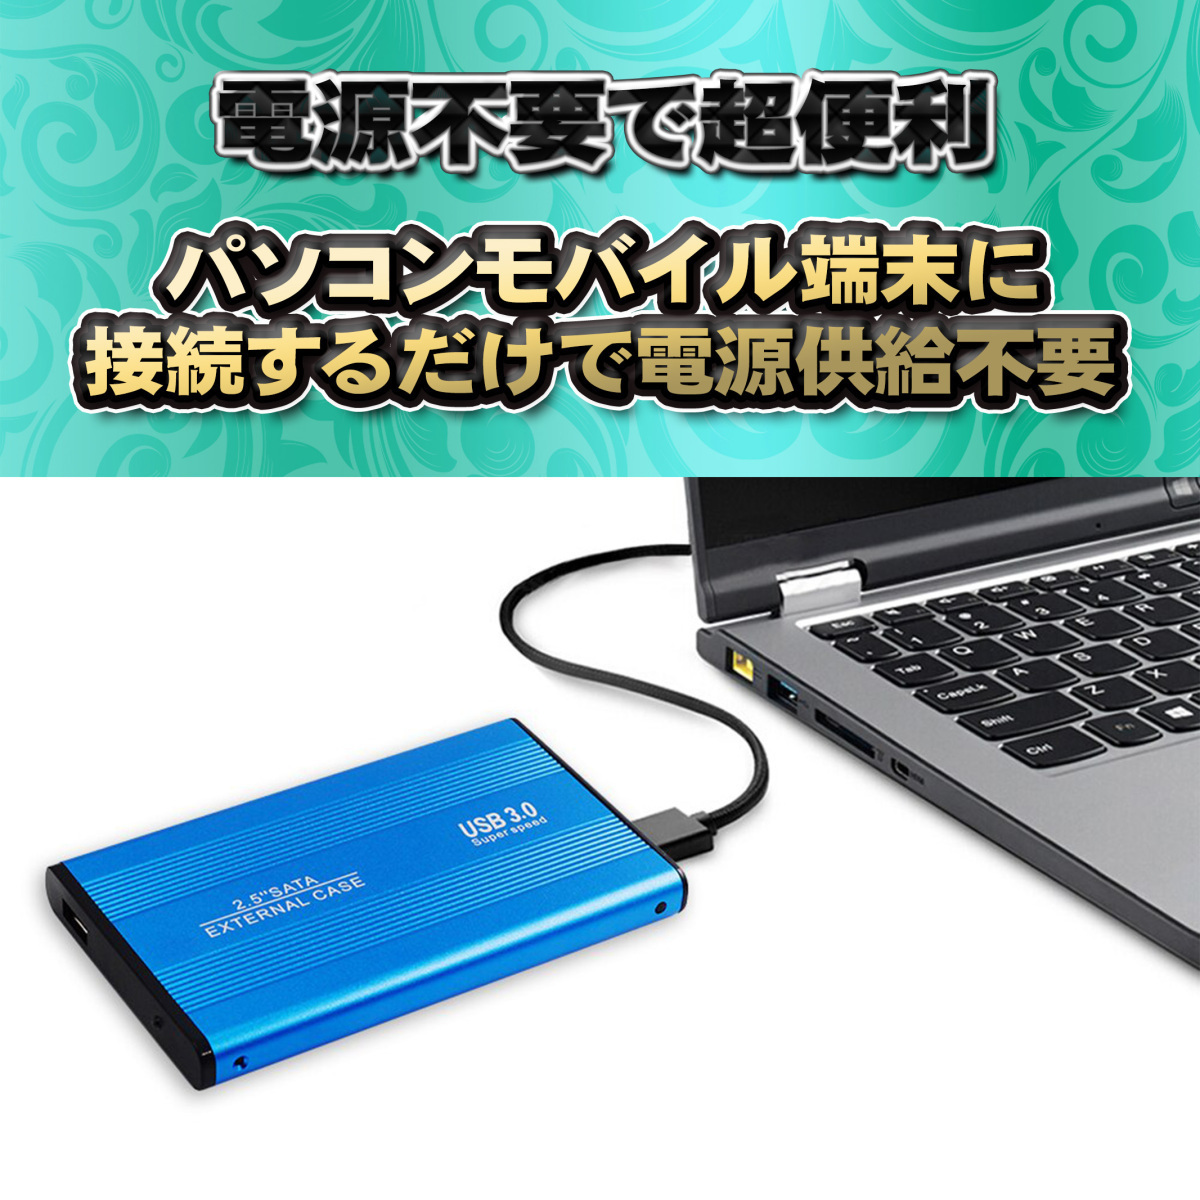 【USB2.0対応】【アルミケース】 2.5インチ HDD SSD ハードディスク 外付け SATA 2.0 USB 接続 【ブルー】_画像6